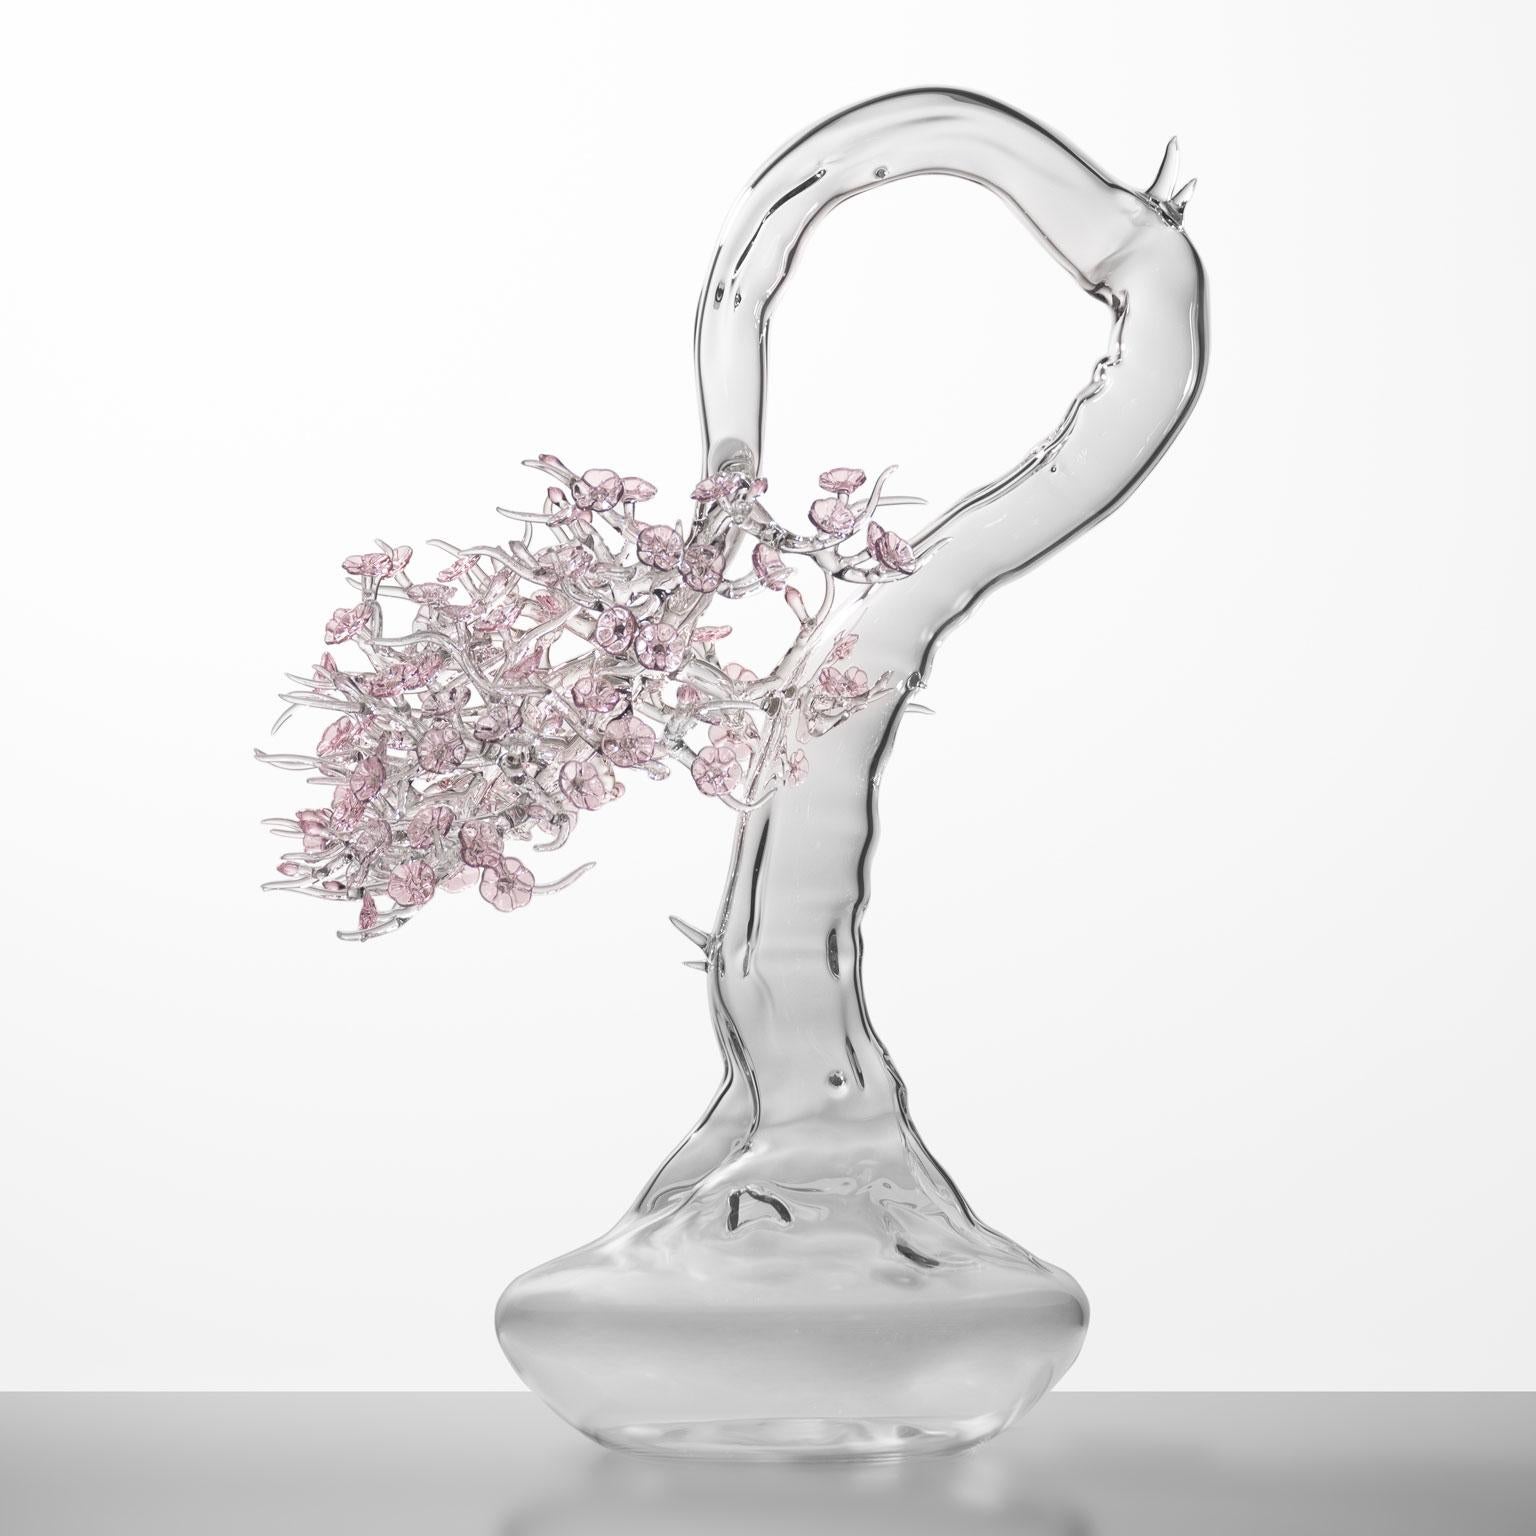 Hand-blown glass sculpture representing a bonsai tree in blossom.

